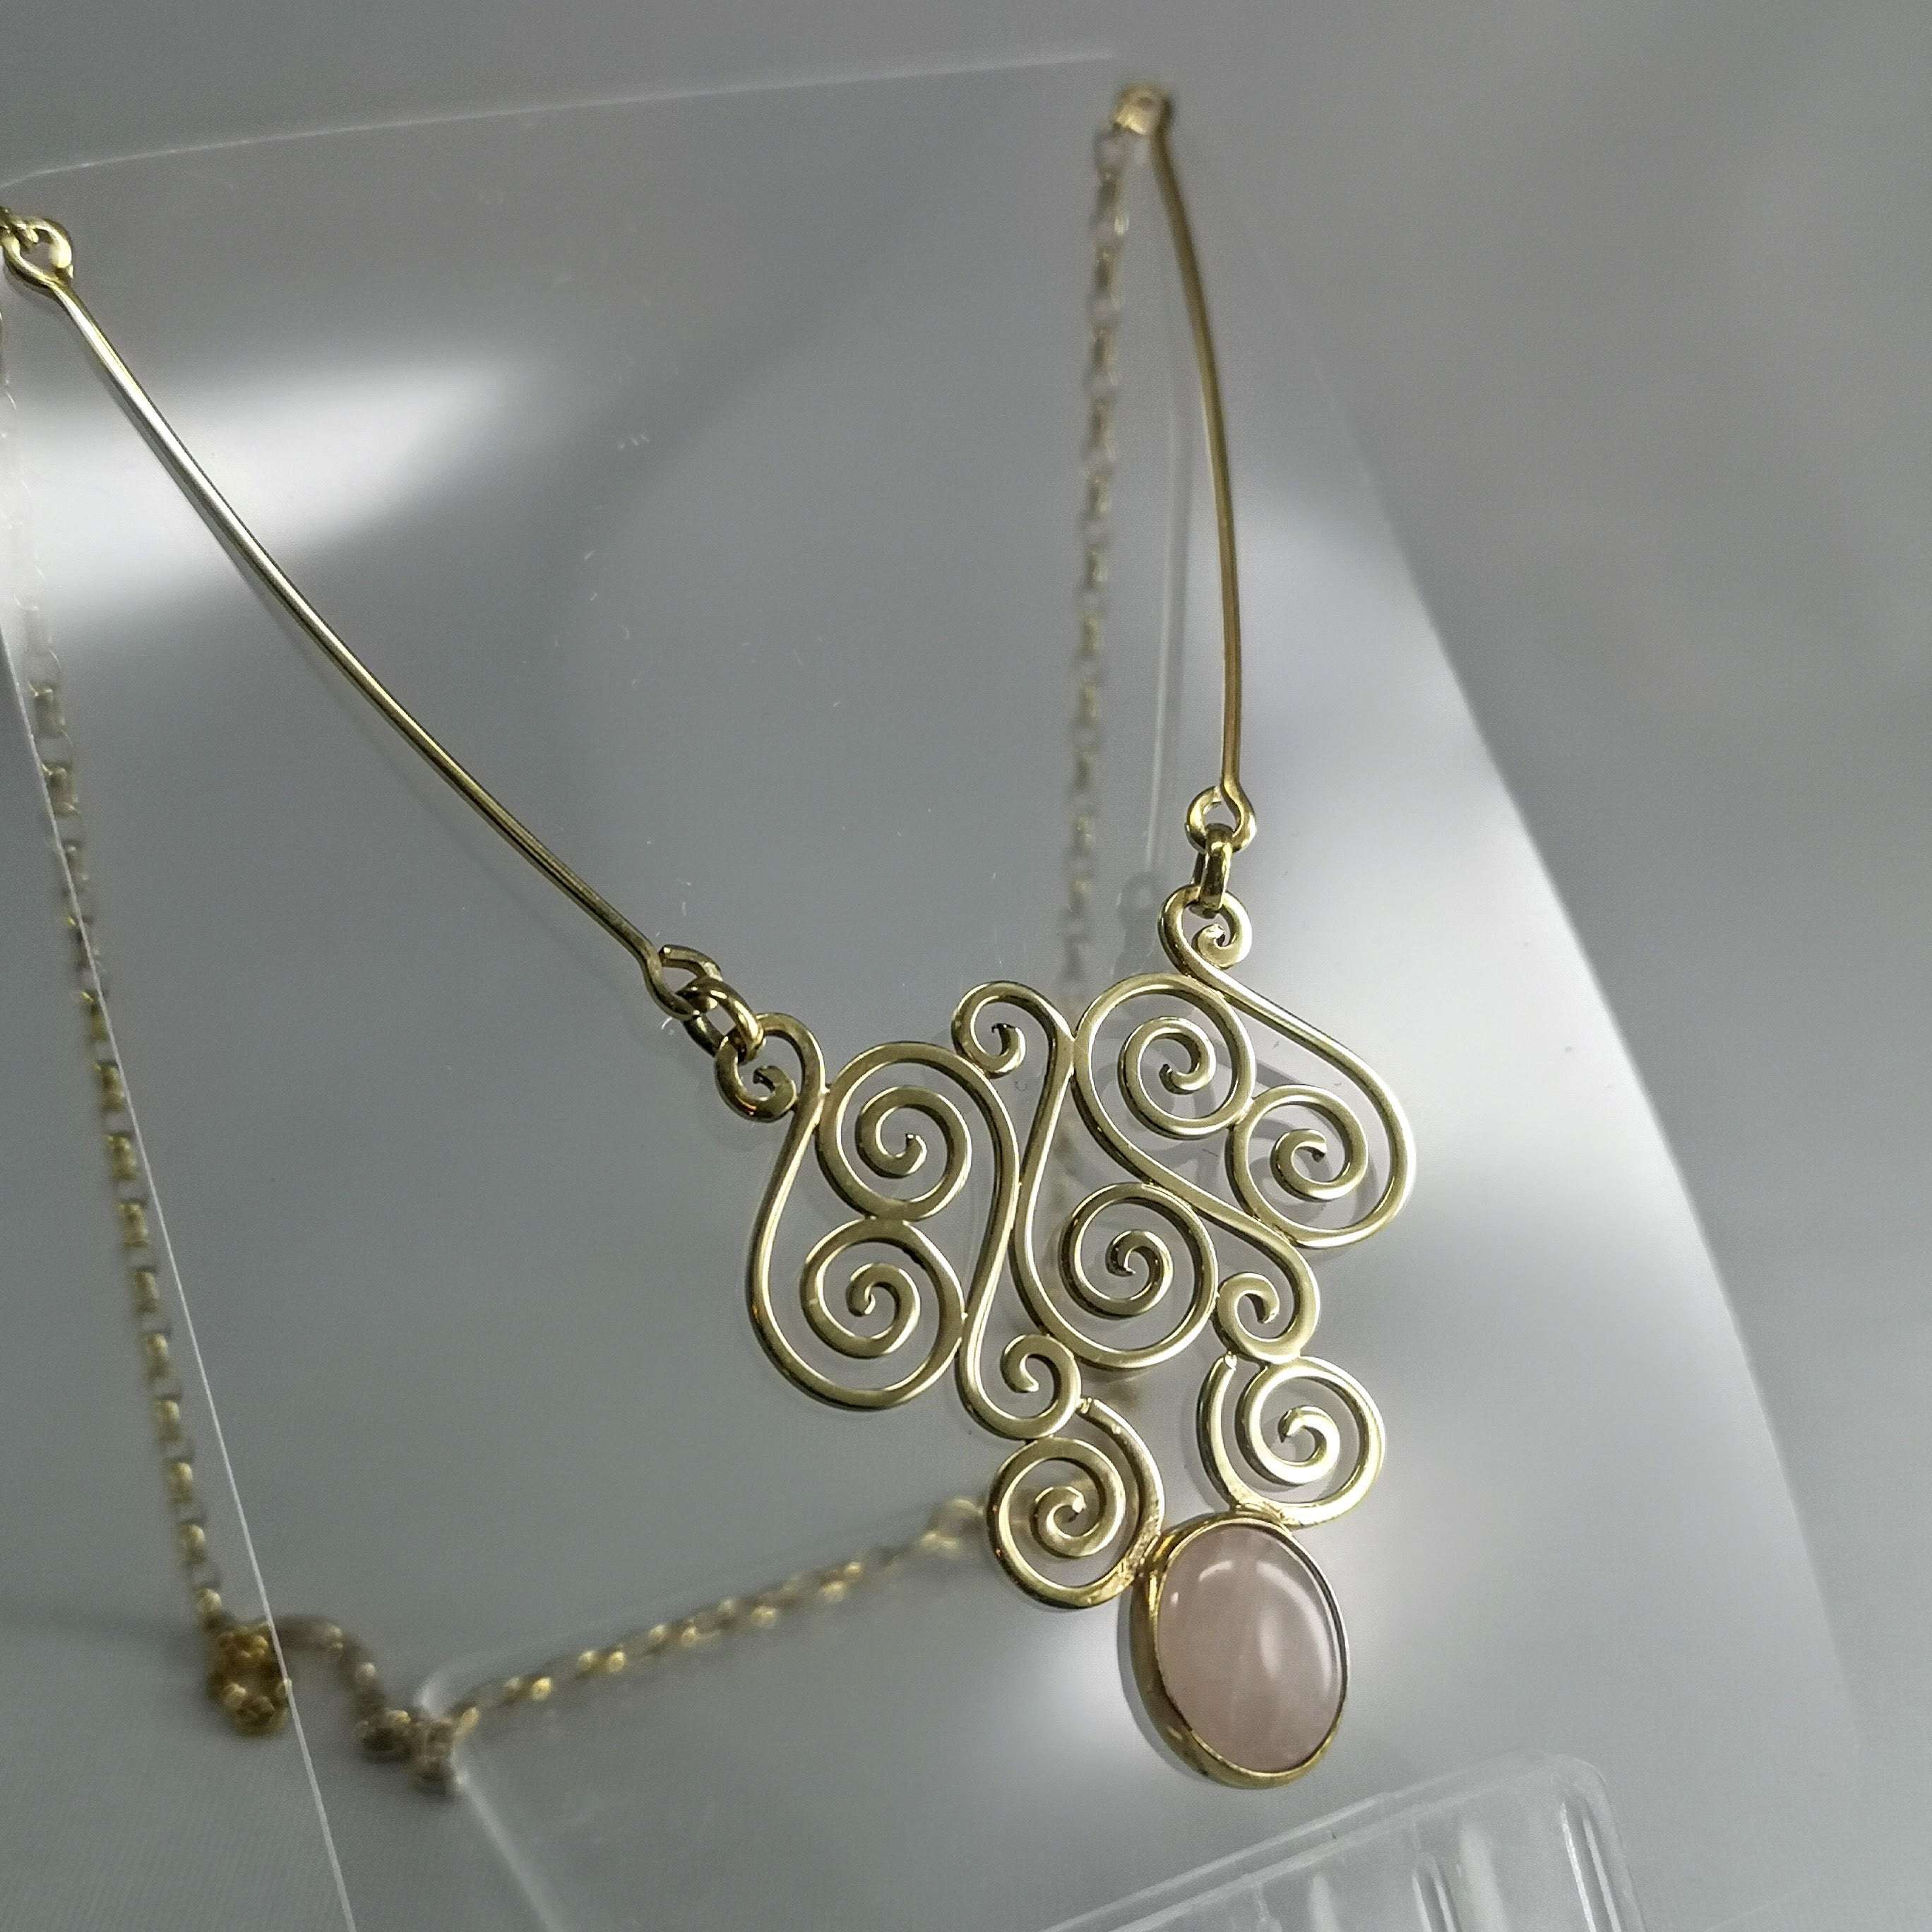 9ct Gold ornate spiral neckpiece with a beautiful rose quartz crystal